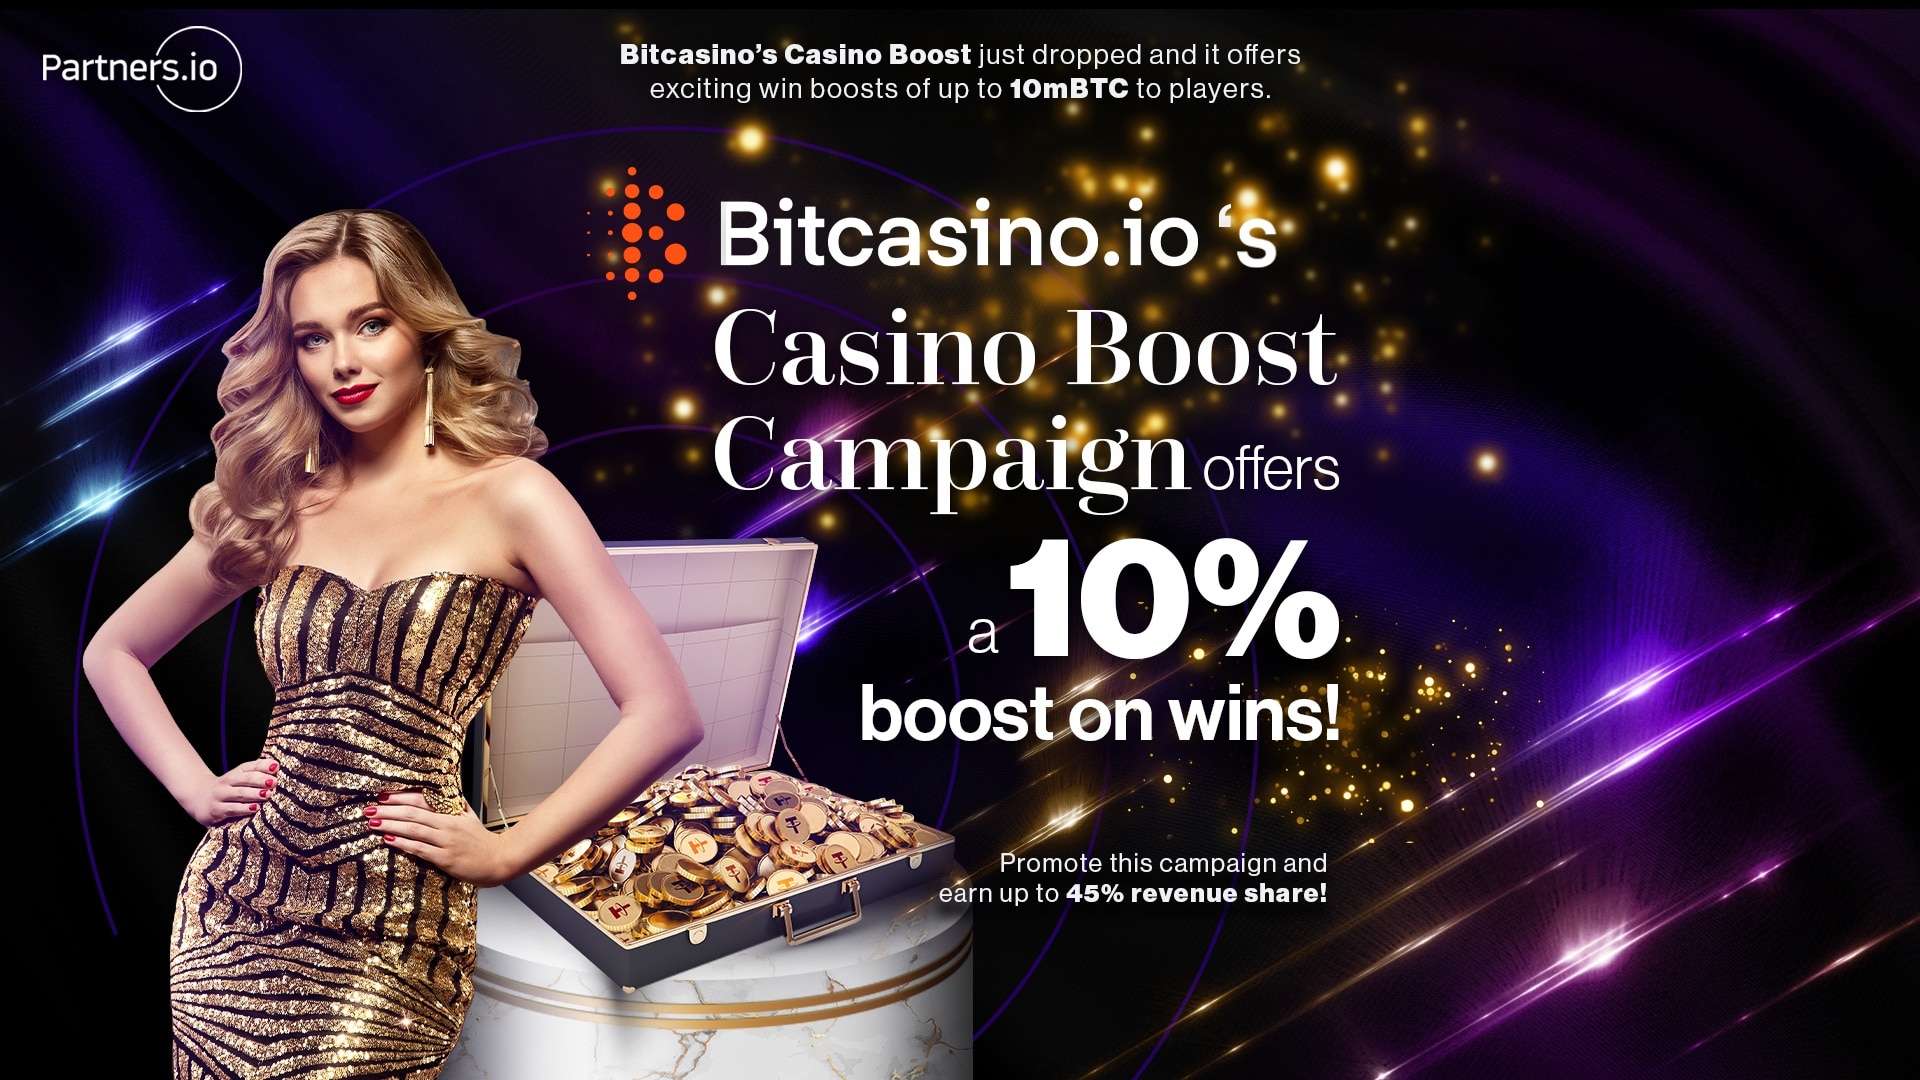 Bitcasino’s Casino Boost campaign offers a 10% boost on wins!